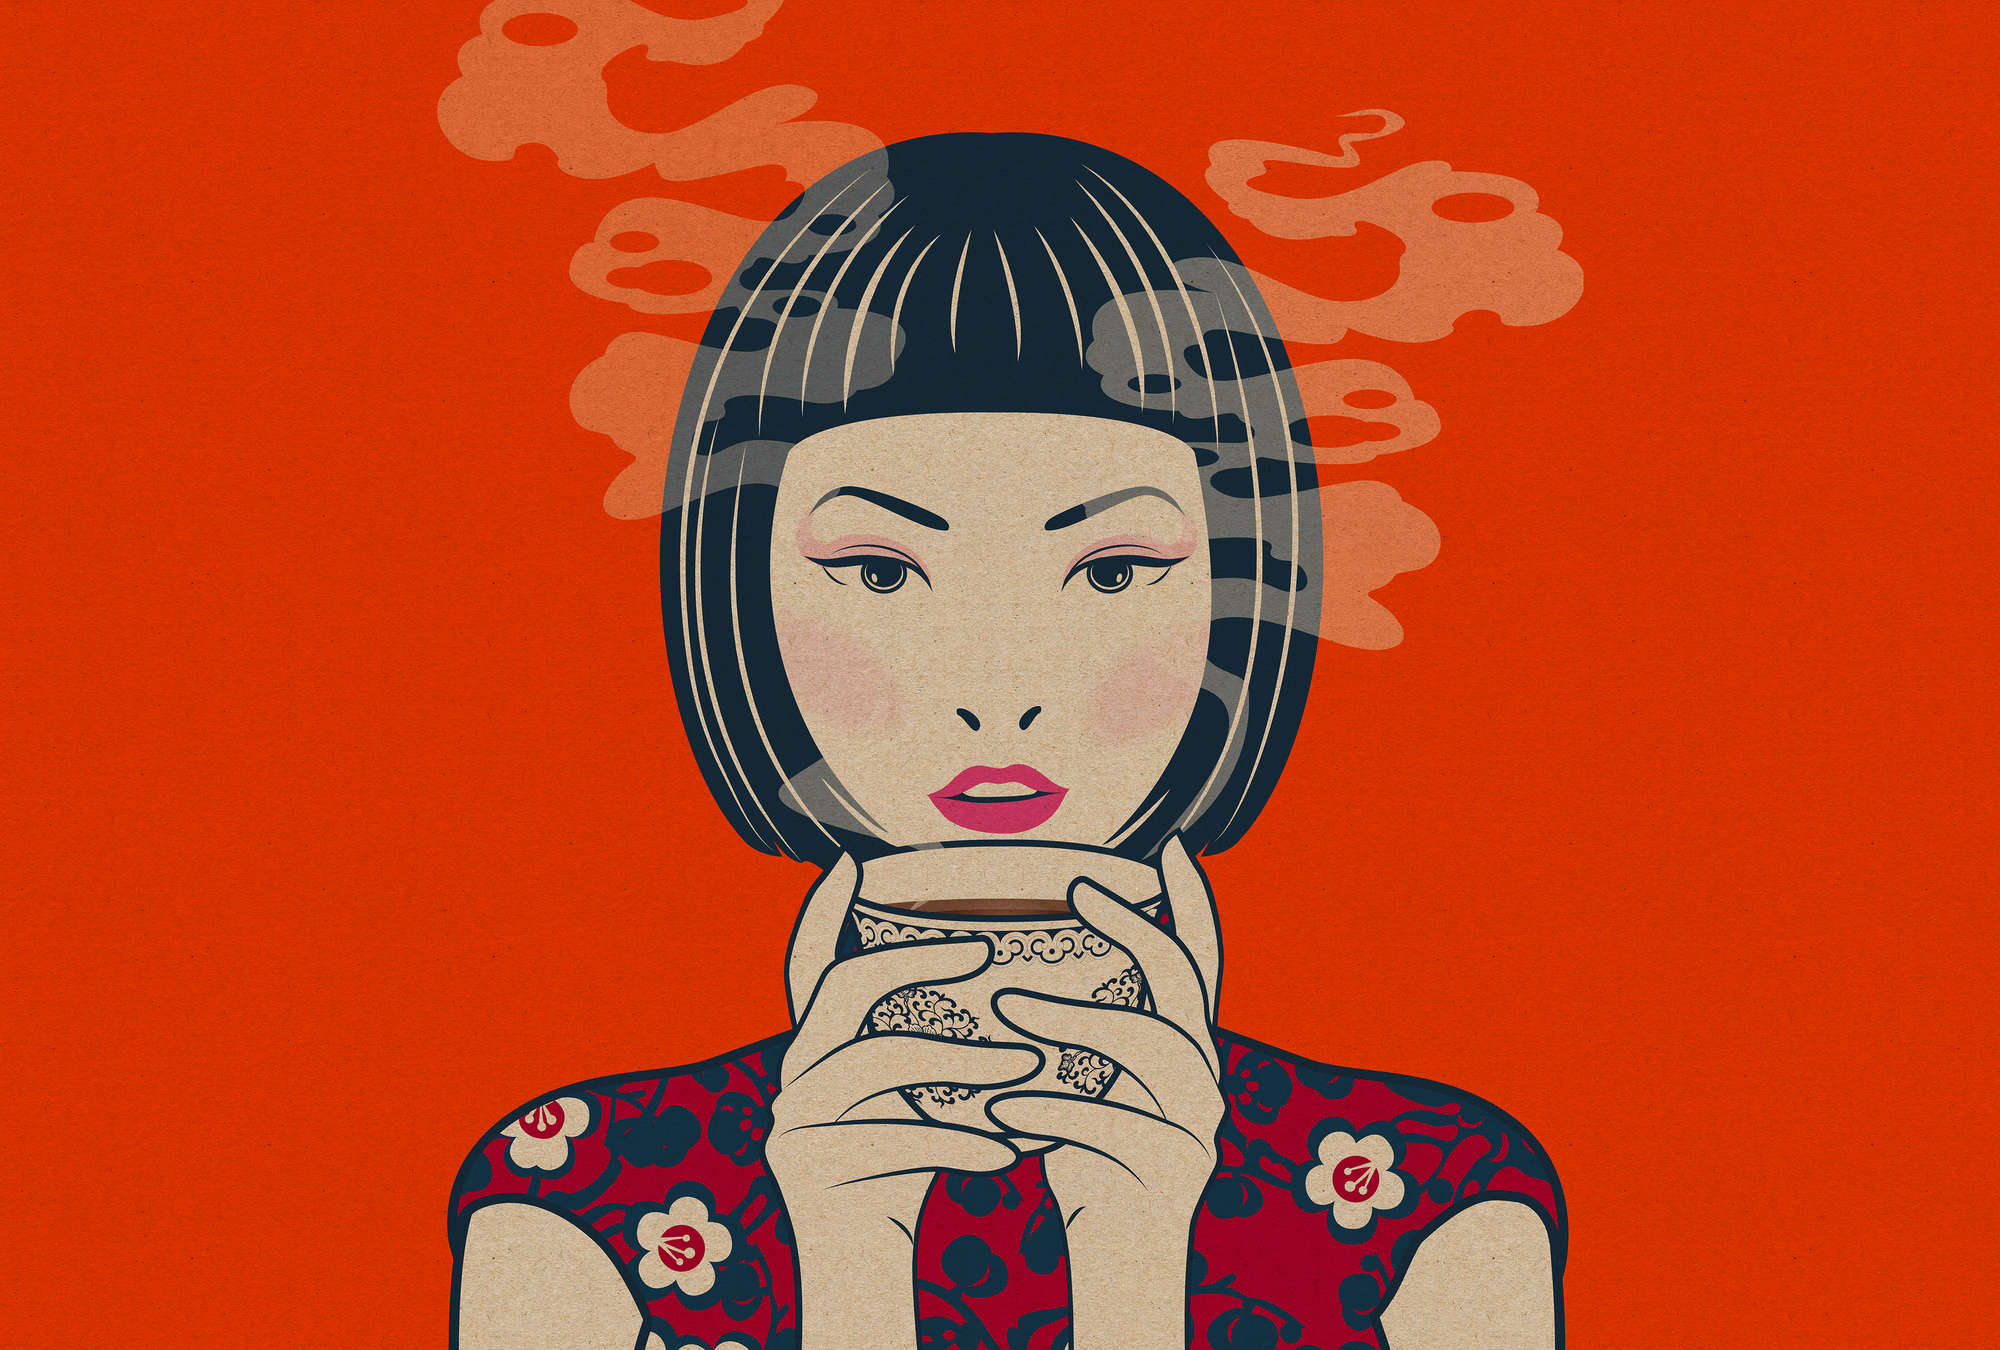             Akari 2 - Time for tea, manga style in cardboard structure on photo wallpaper - Beige, Orange | Matt smooth fleece
        